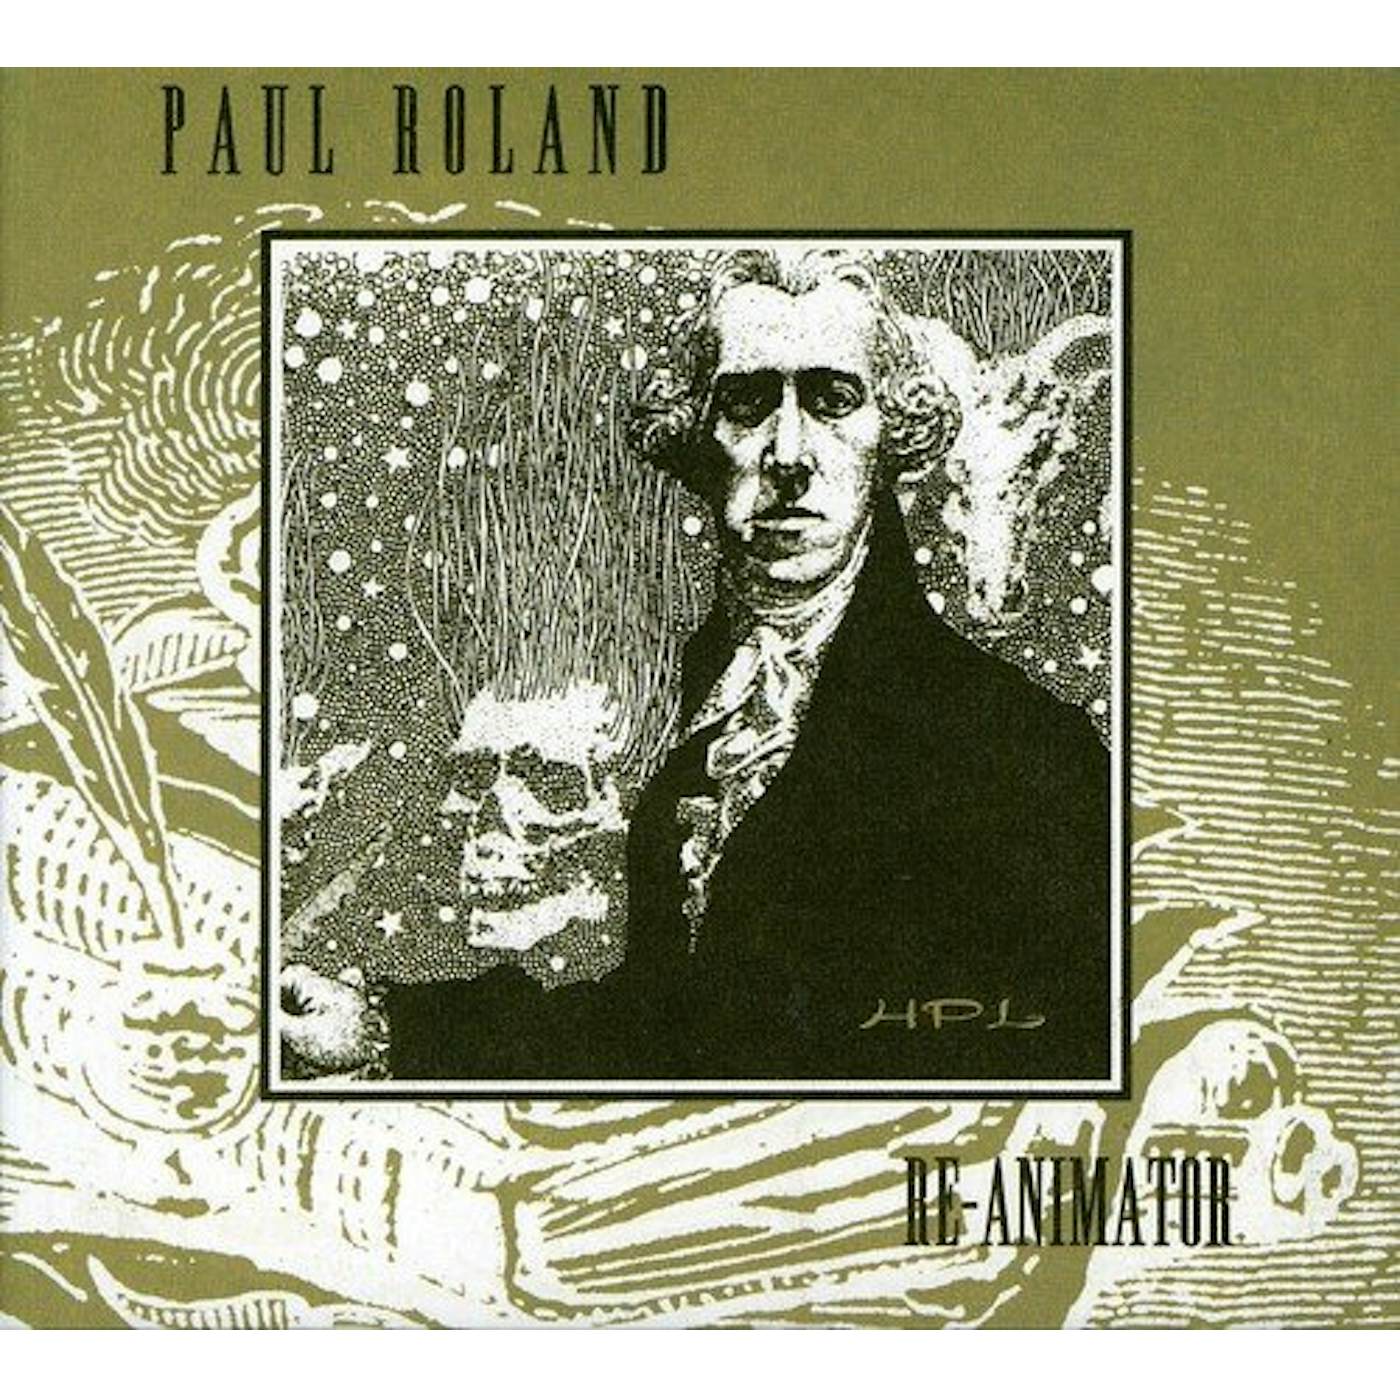 Paul Roland Re-animator Vinyl Record